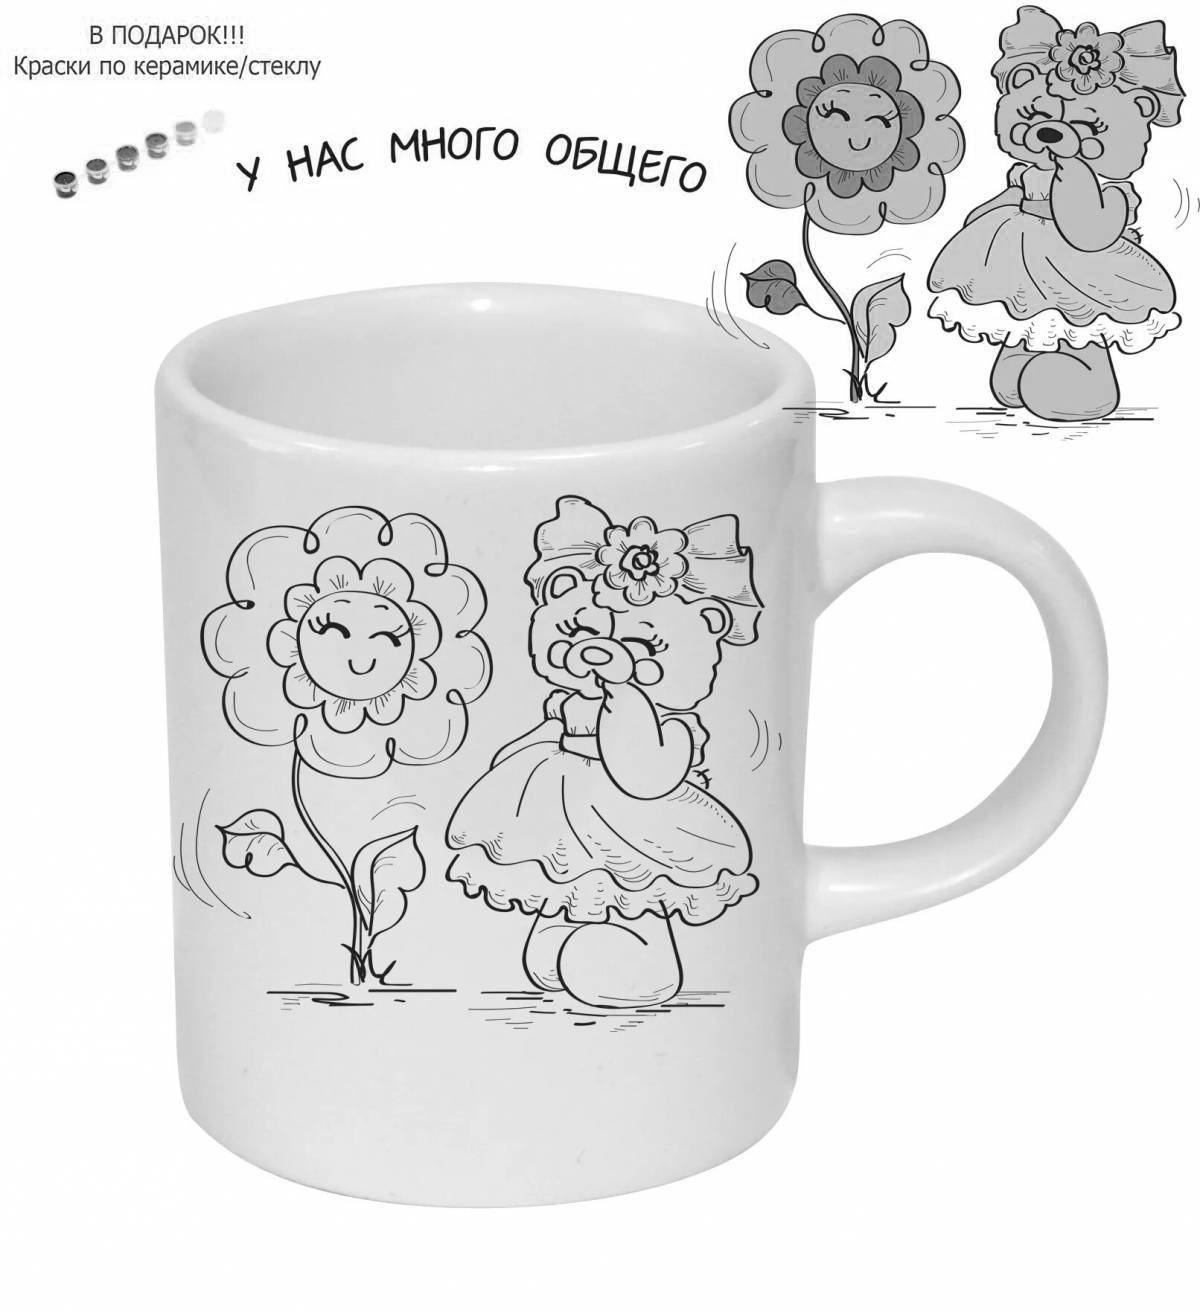 Nice mug coloring guide